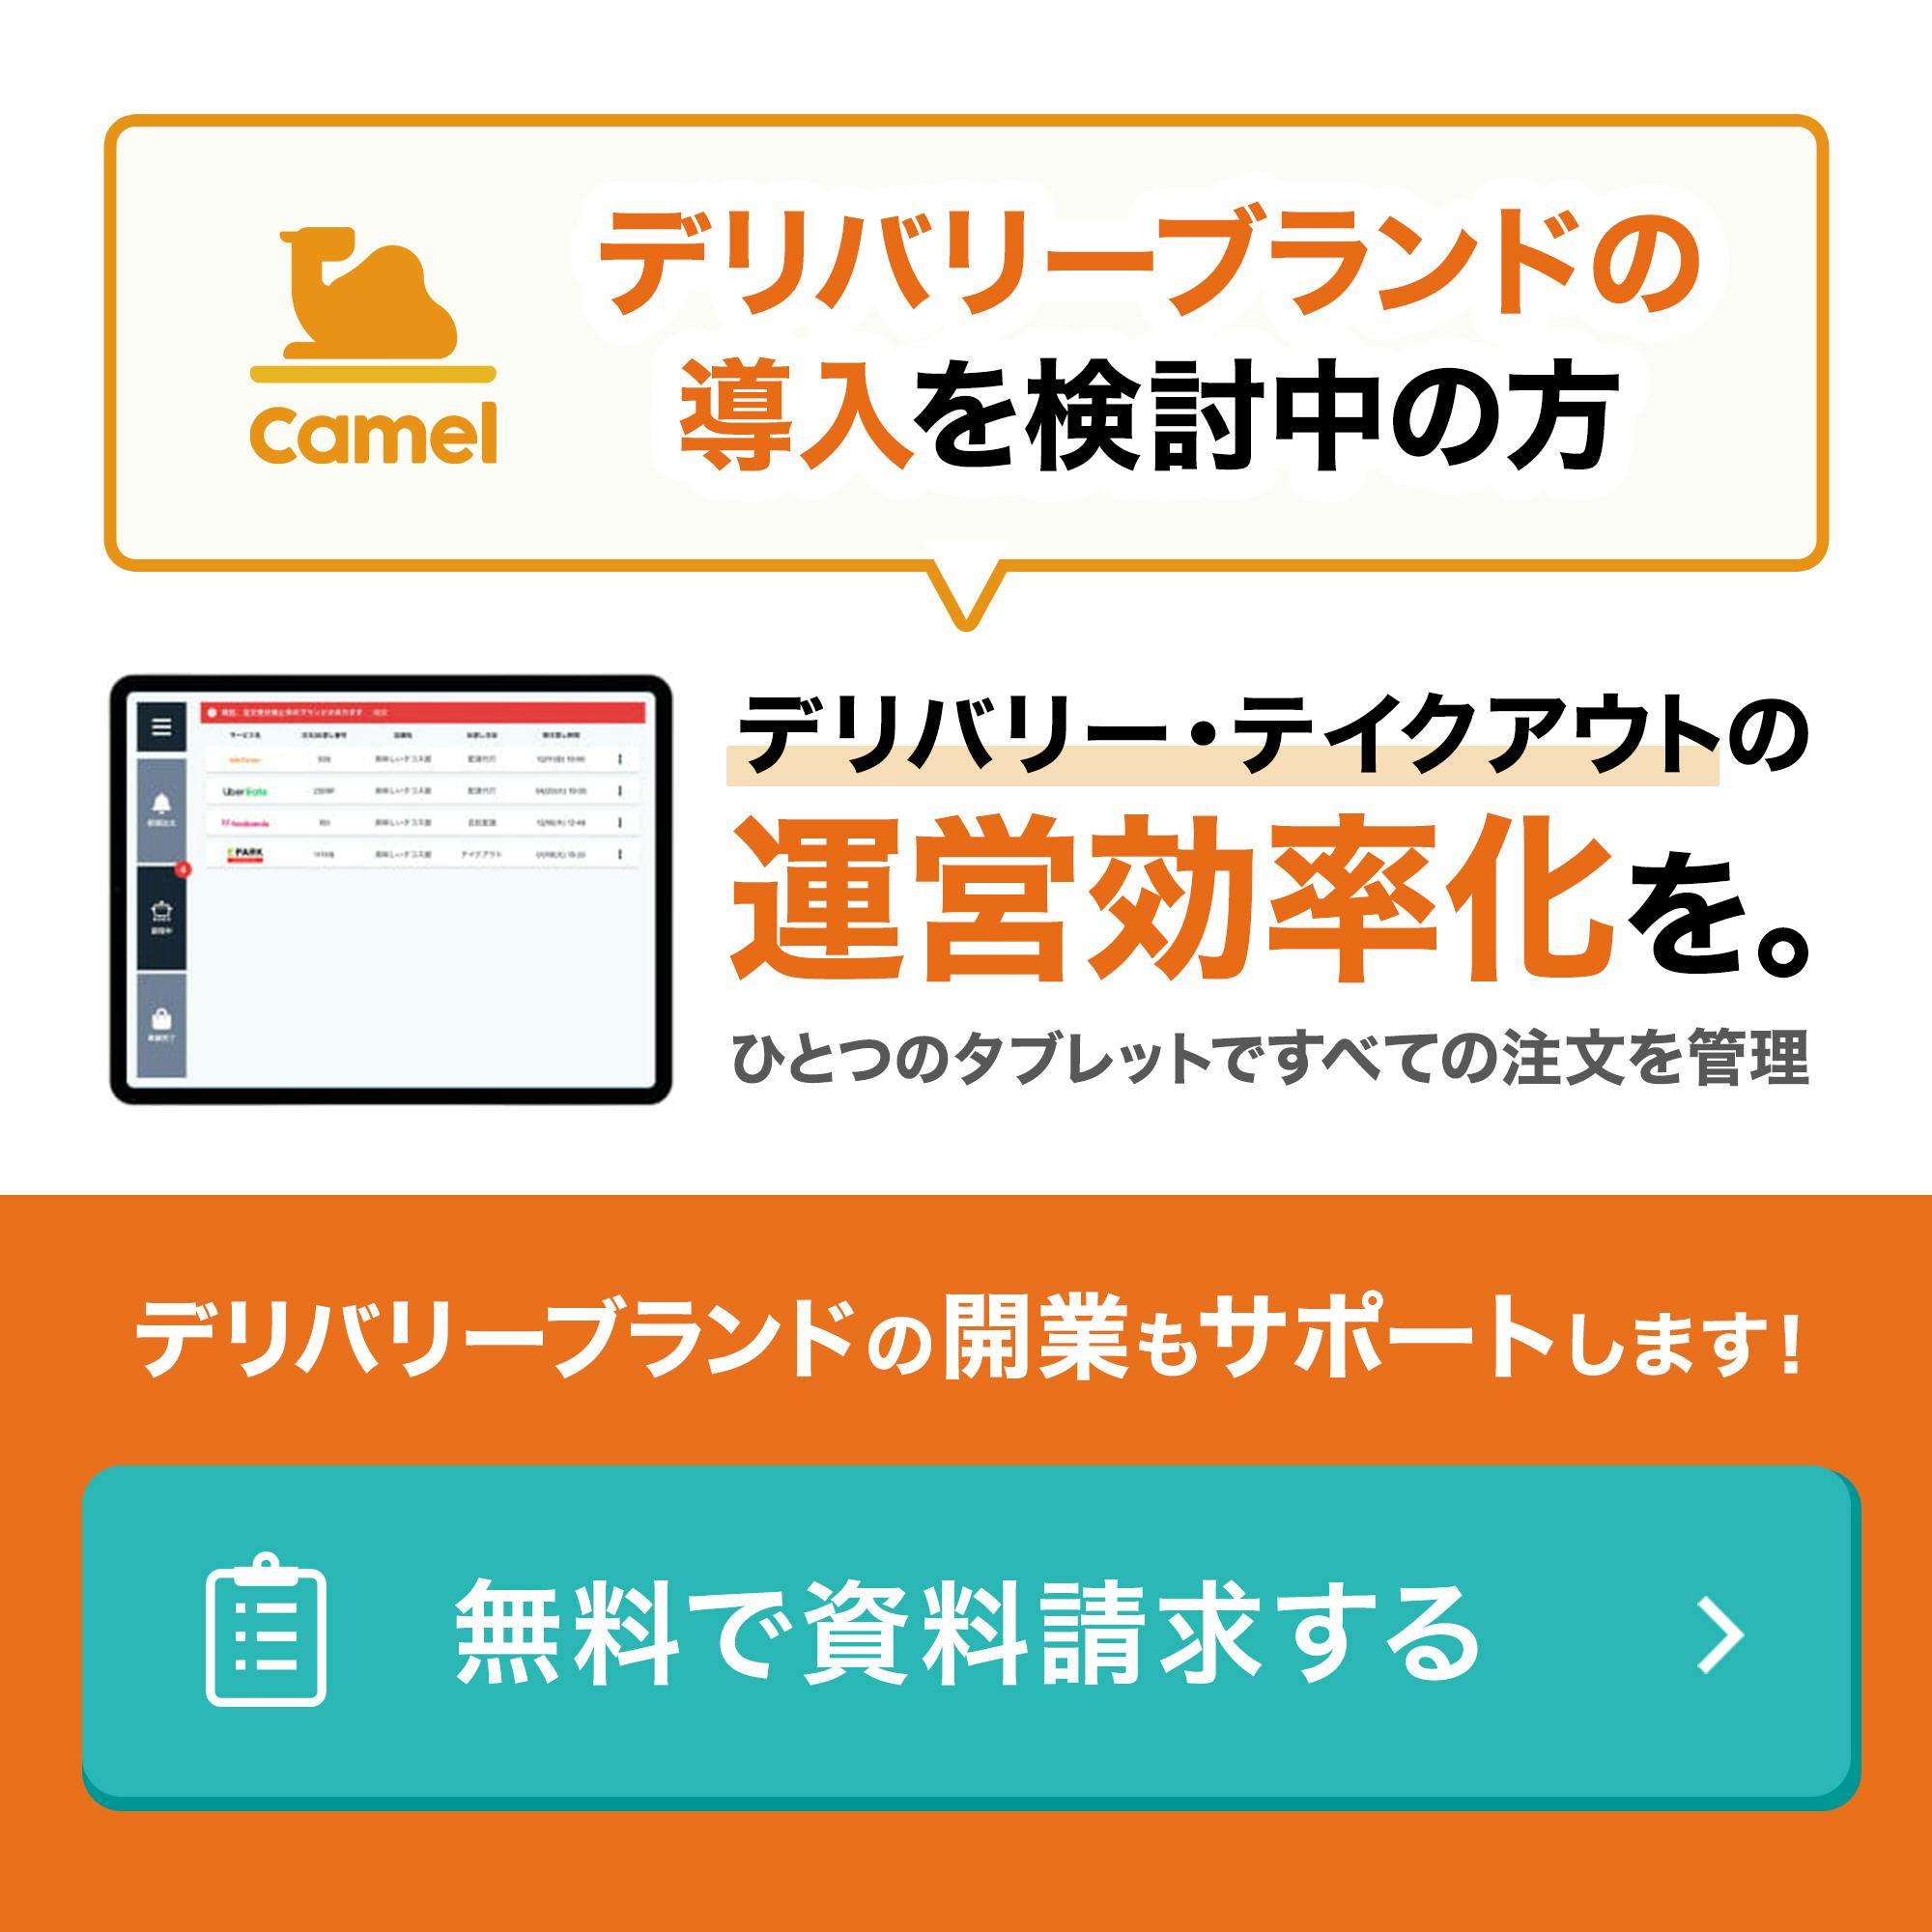 Camel タブレット一元管理ツール(株式会社tacoms)の詳細情報